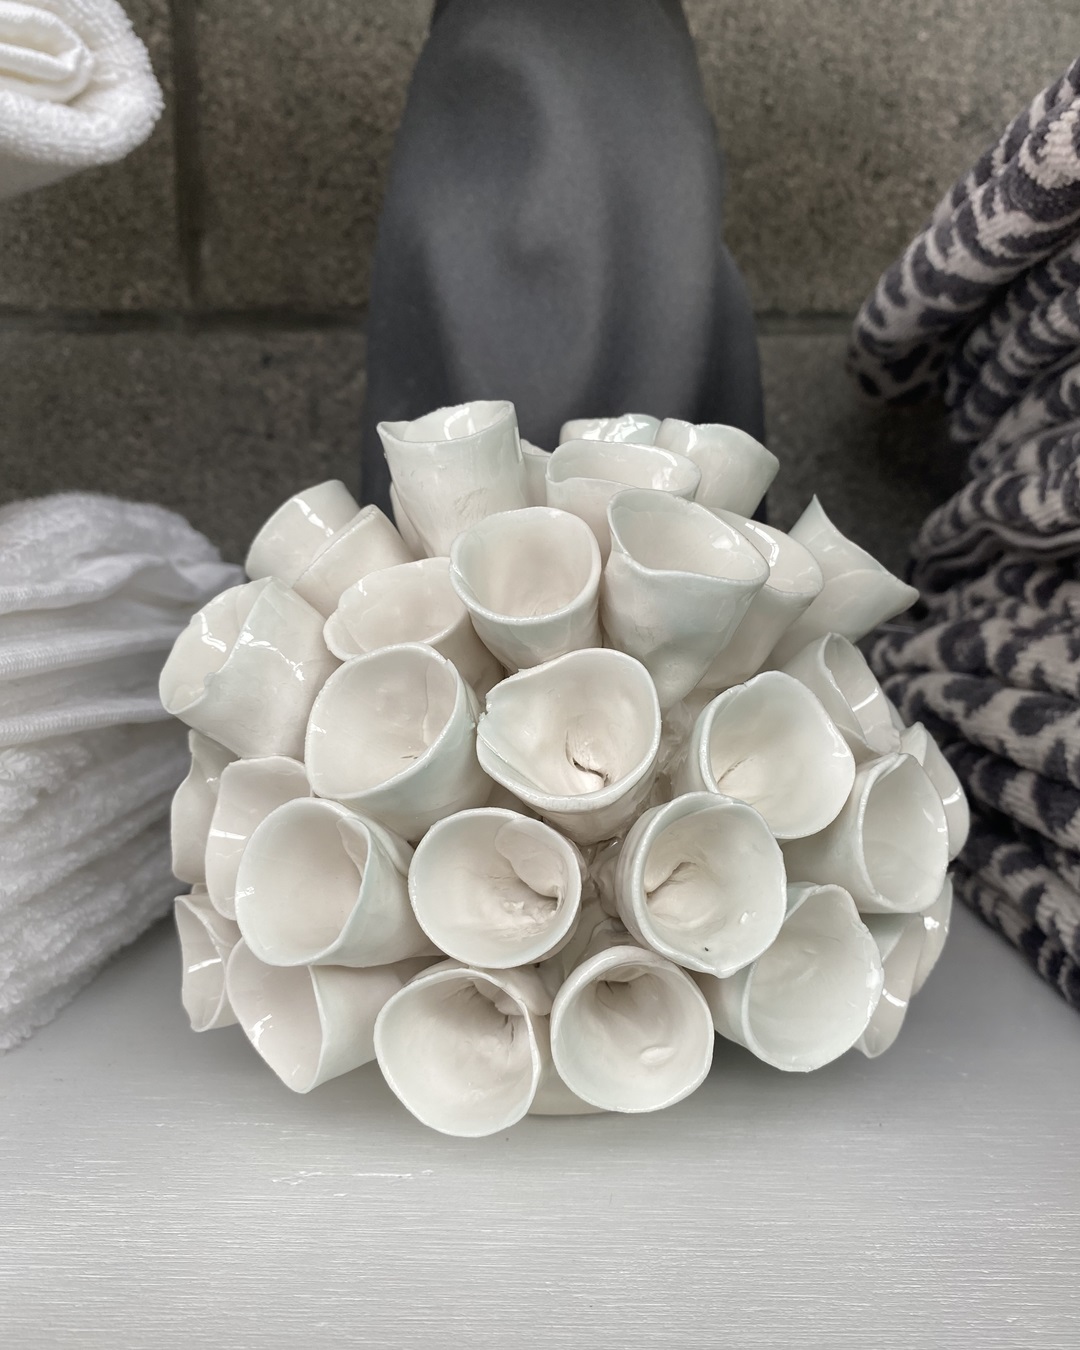 Ceramic white coral display item on shelf